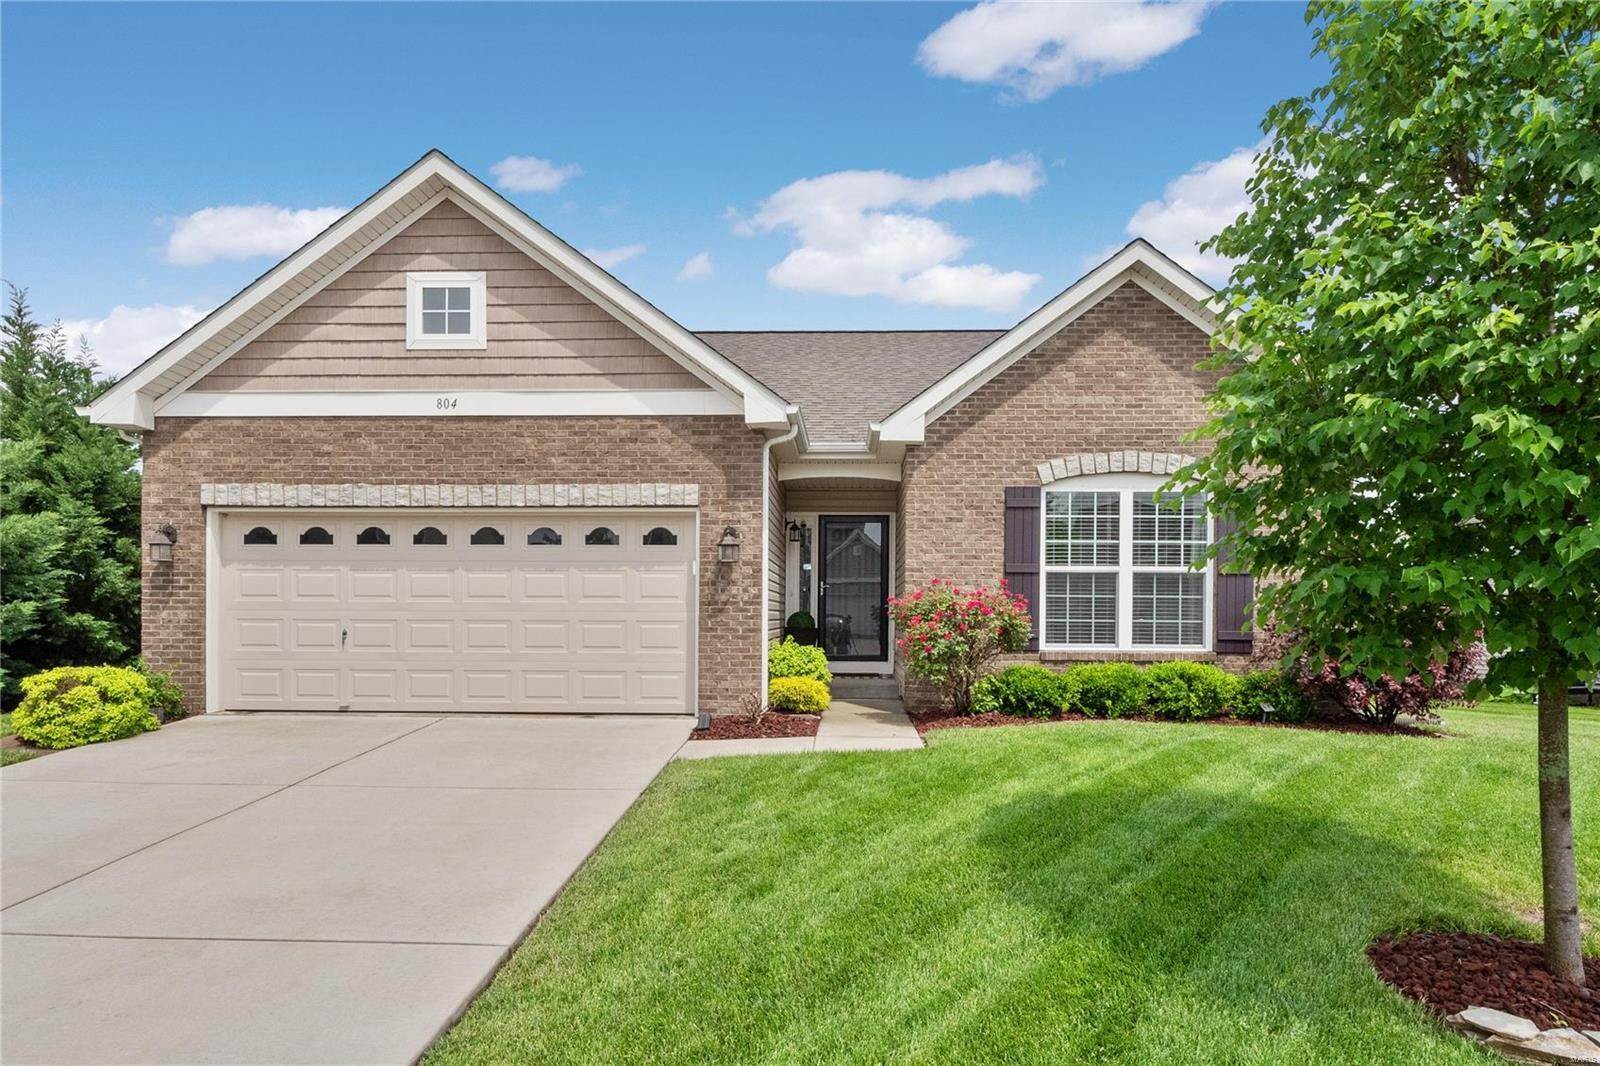 Property for Sale at 804 Hawkridge Run Shiloh, Illinois 62221 United States